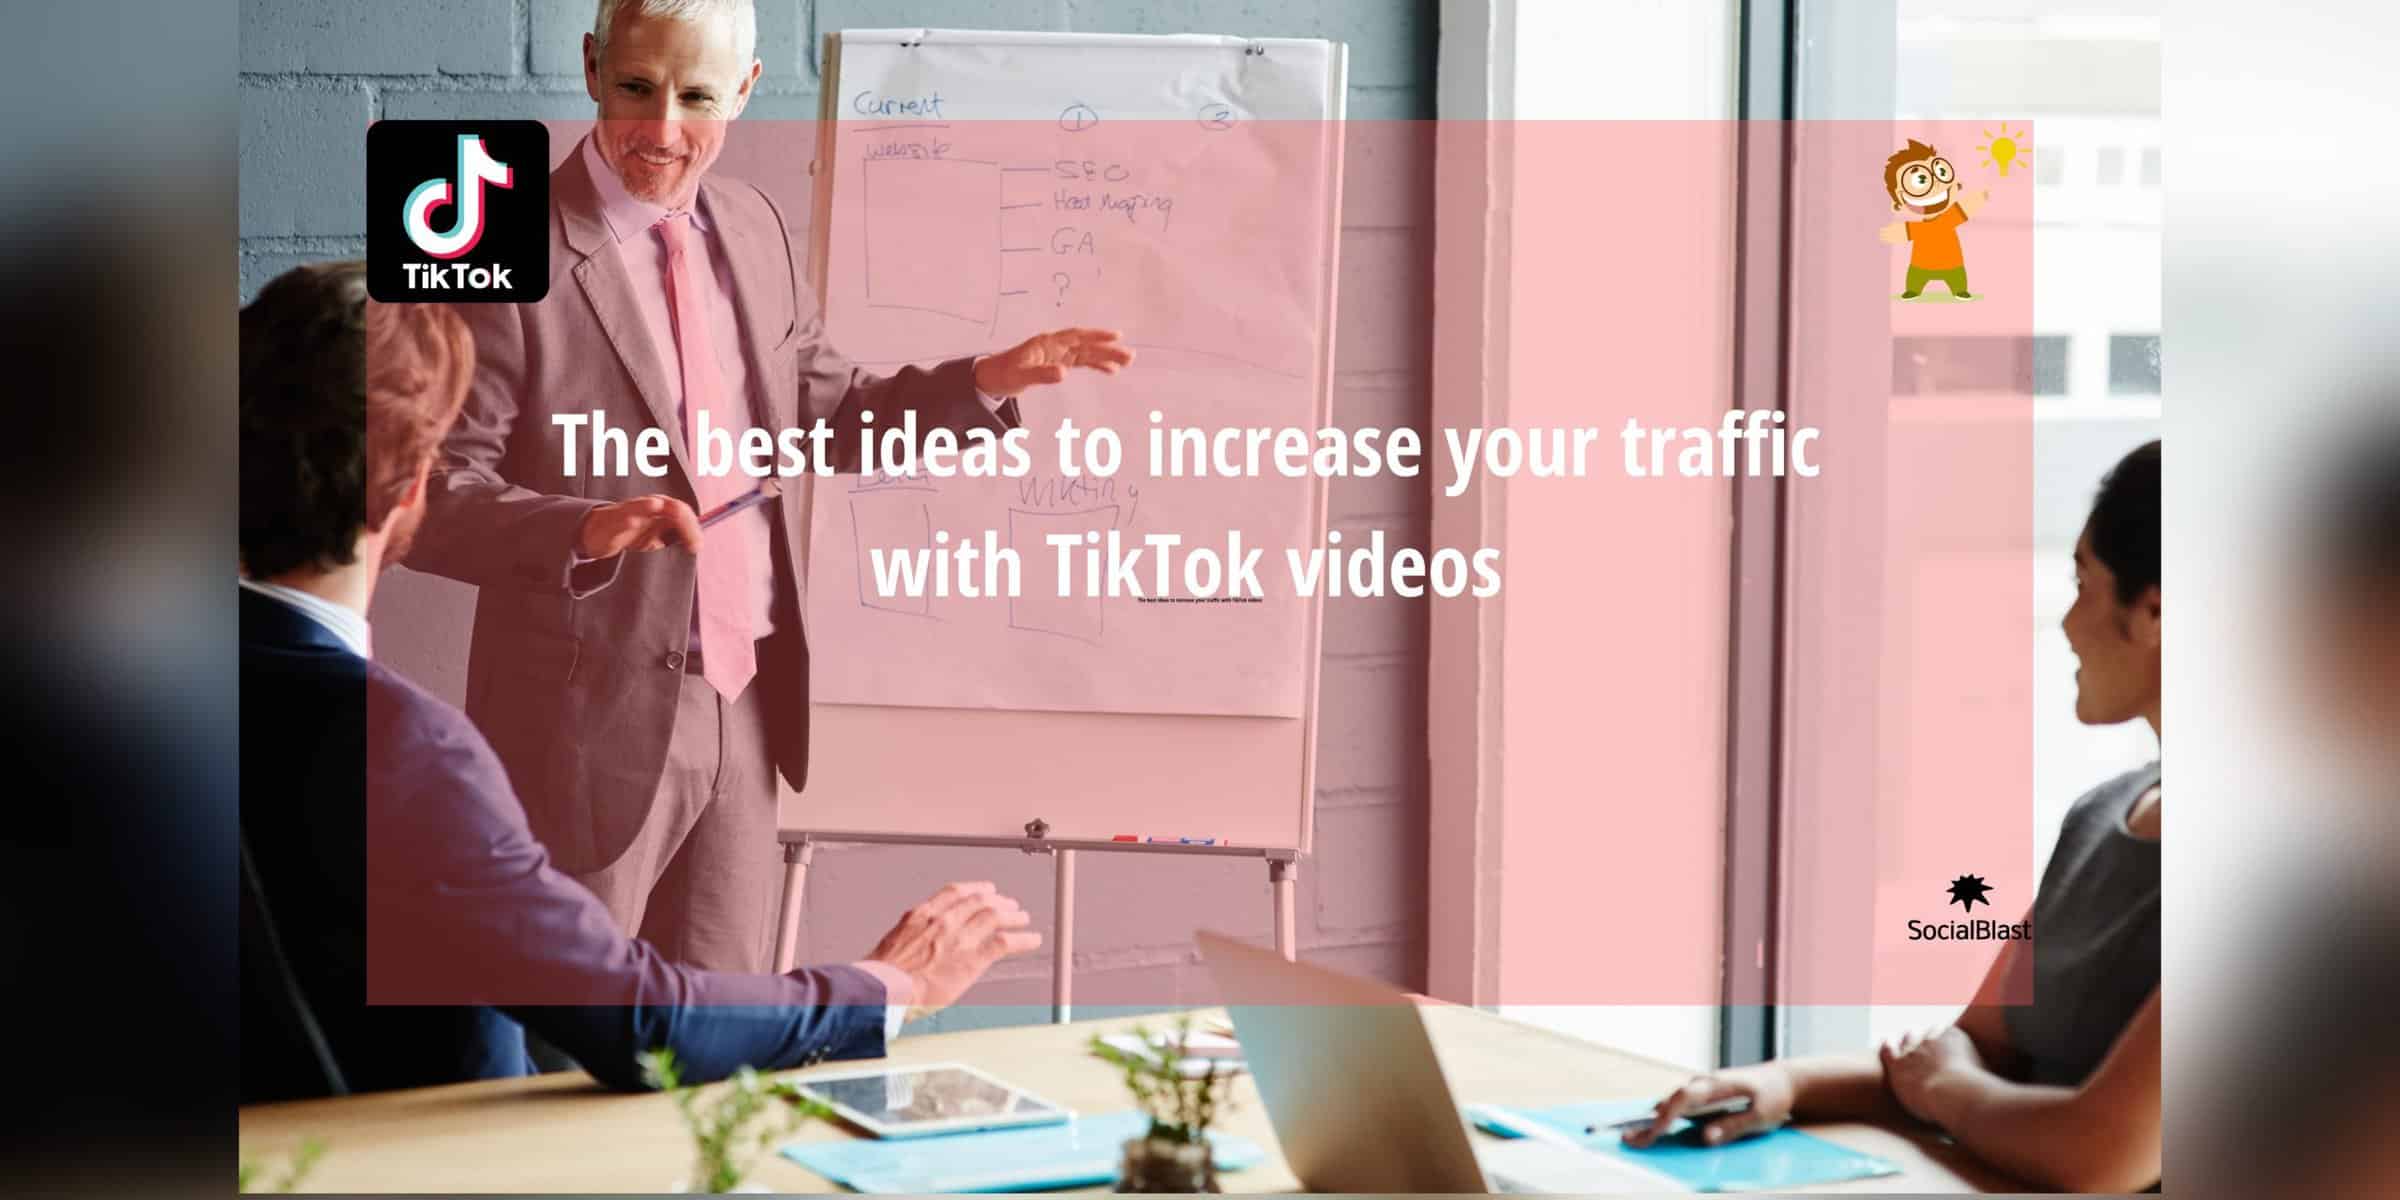 tiktok image about the best ideas